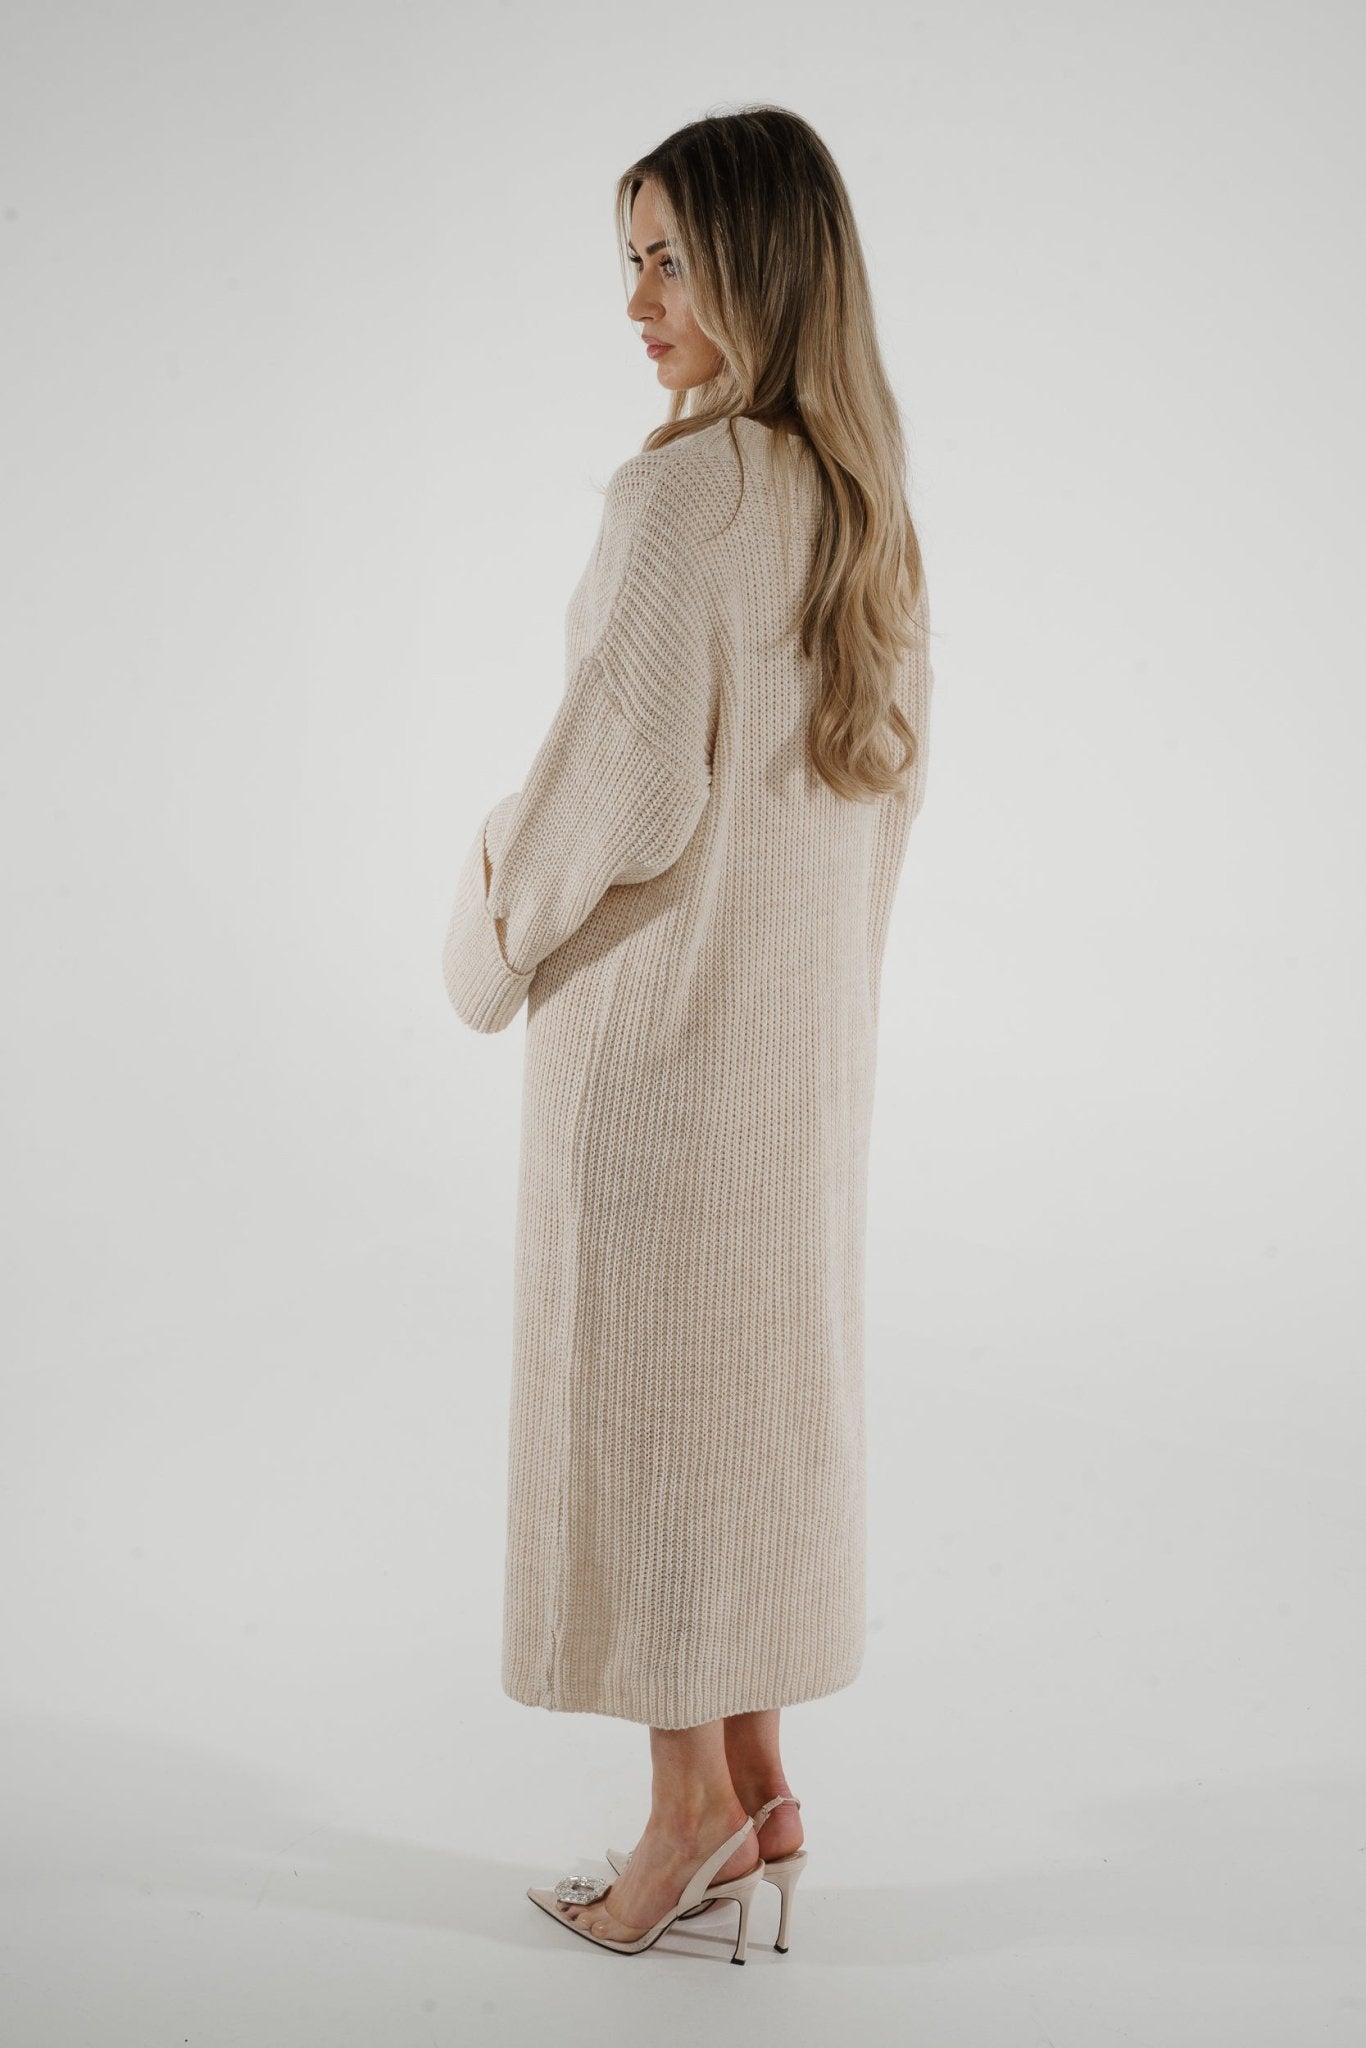 Danni Chunky Knit Dress In Neutral - The Walk in Wardrobe